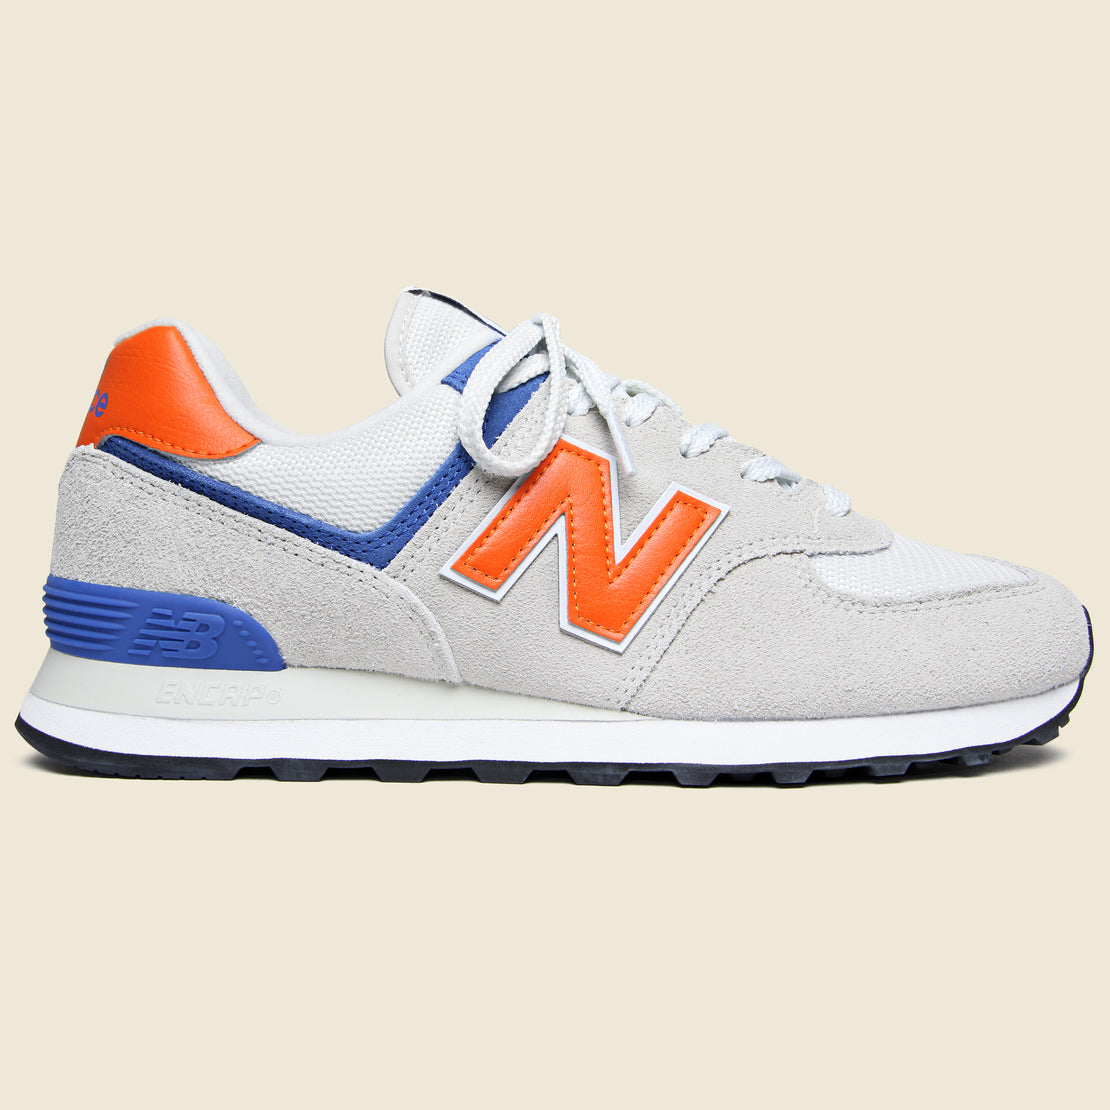 New Balance 574 Sneaker - Blue/Orange